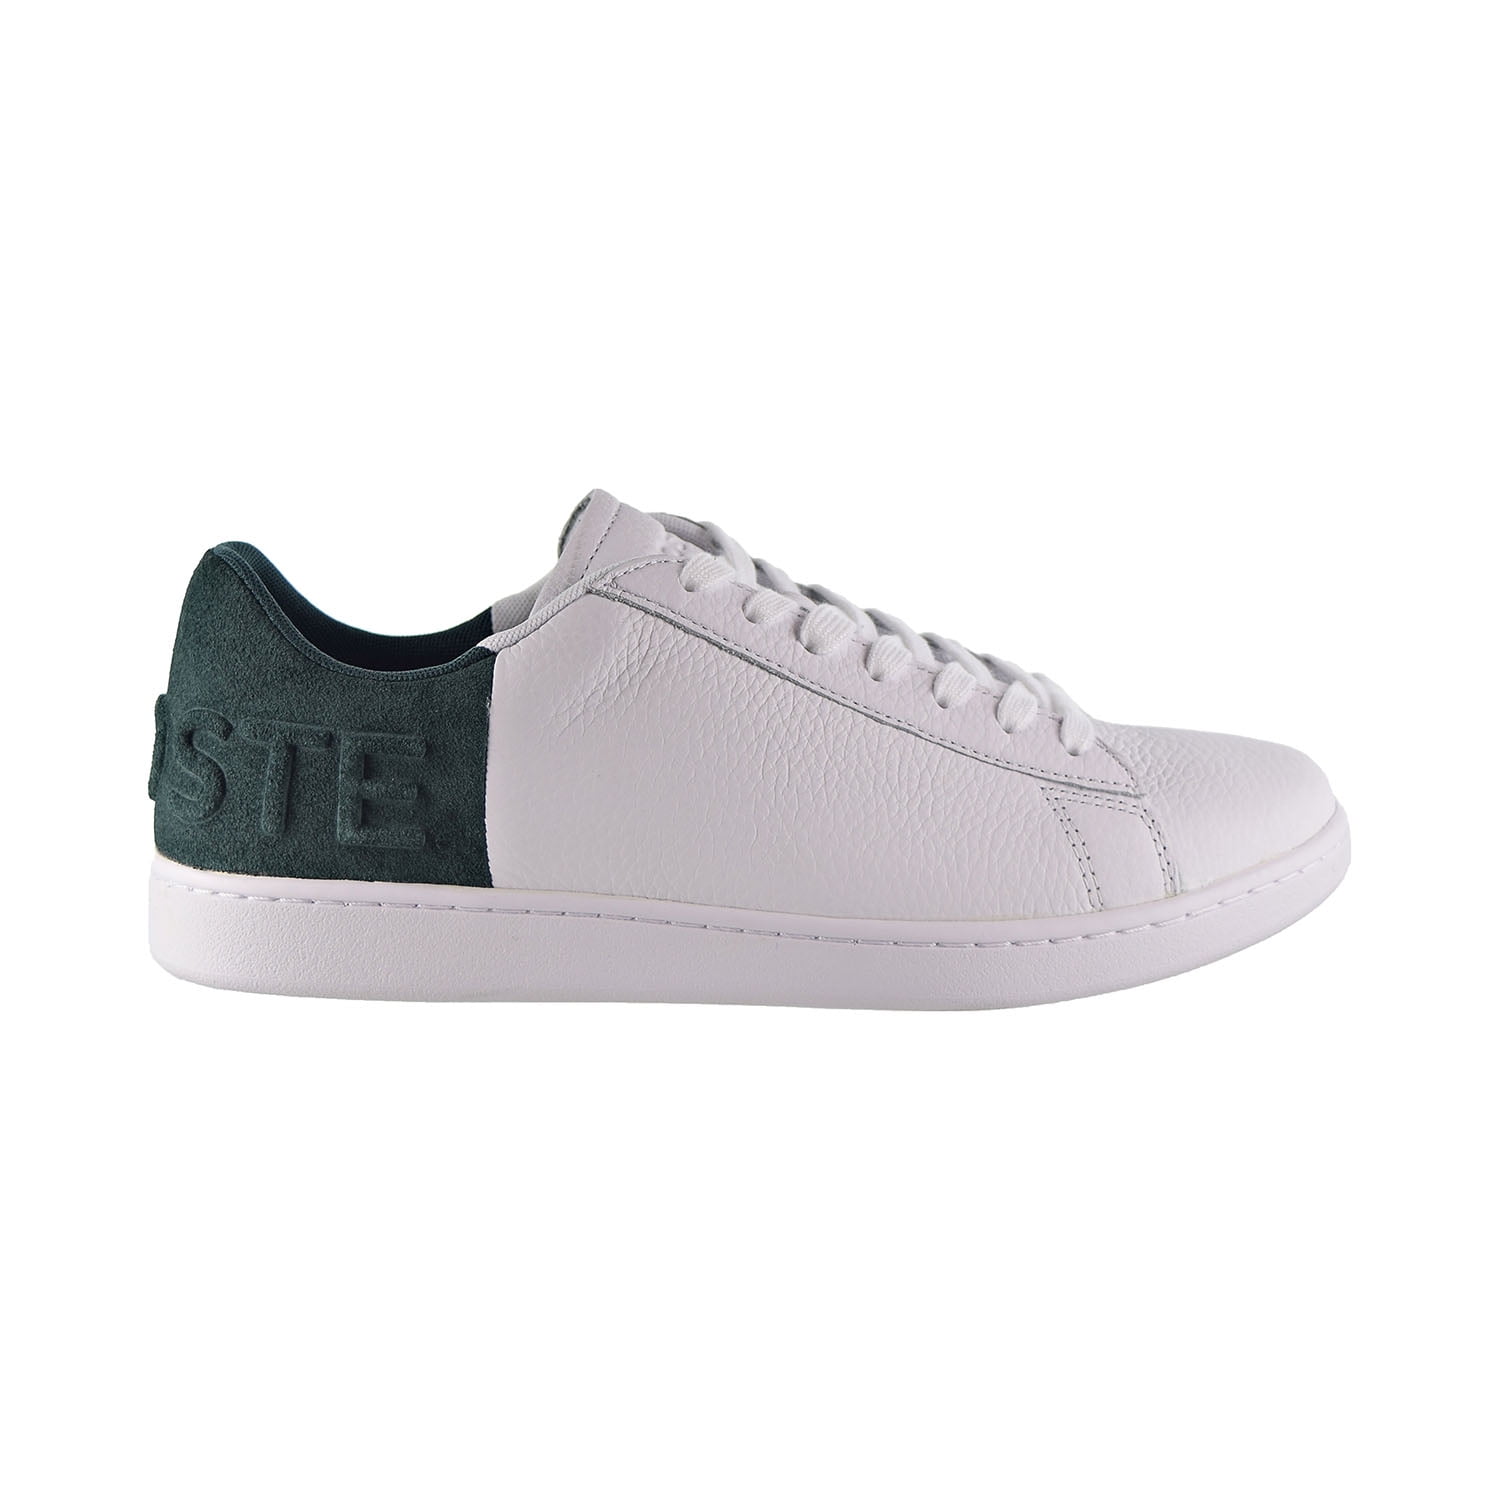 Lacoste Carnaby Evo 419 2 SMA Men's Shoes White/Dark Green 7-38sma0044-1r5 -